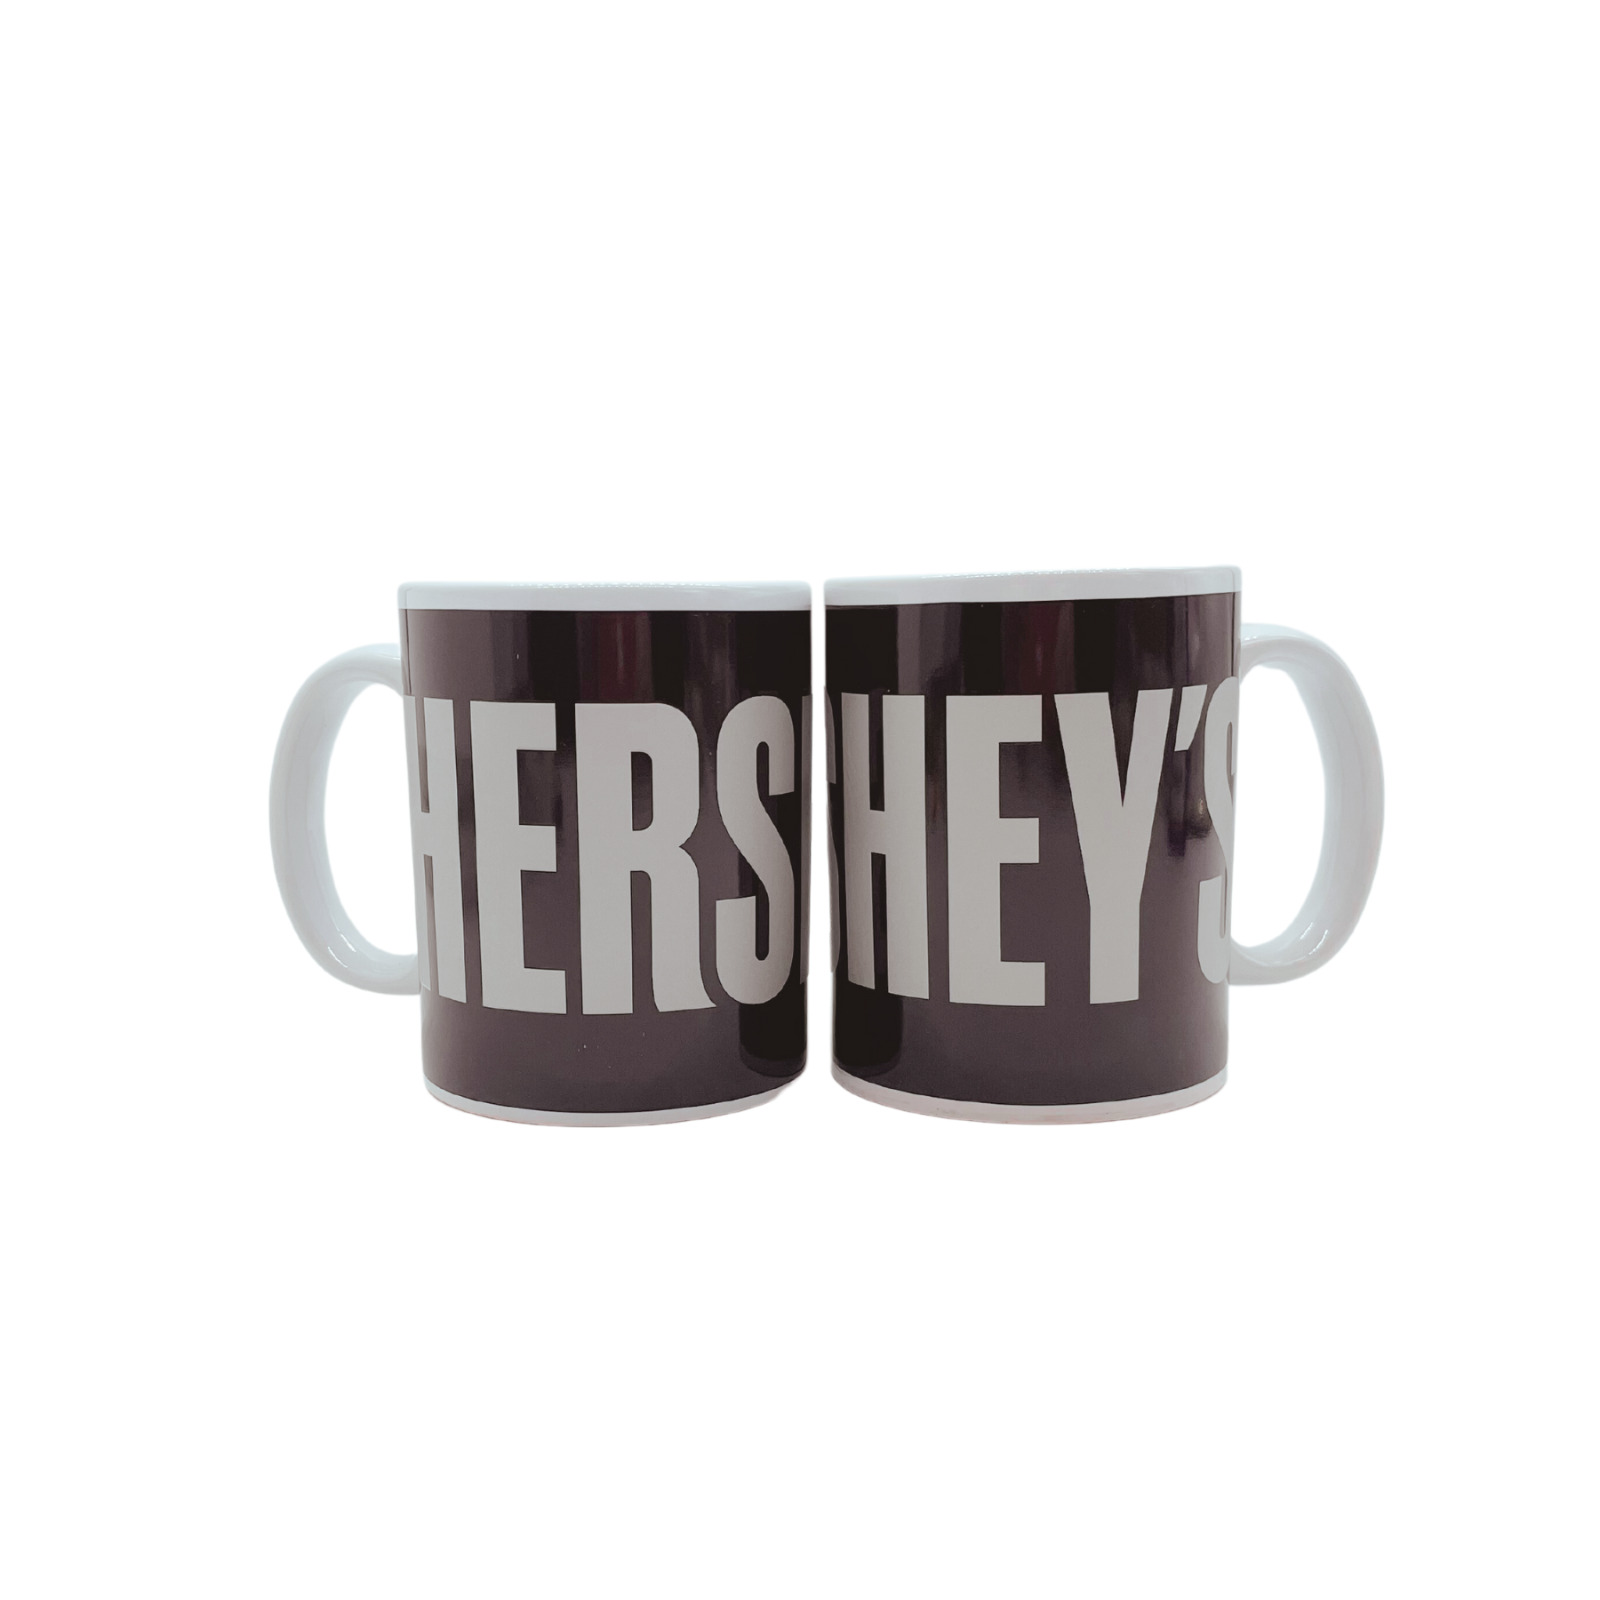 Hershey Coffee Mug, Set of 2, 12 oz 